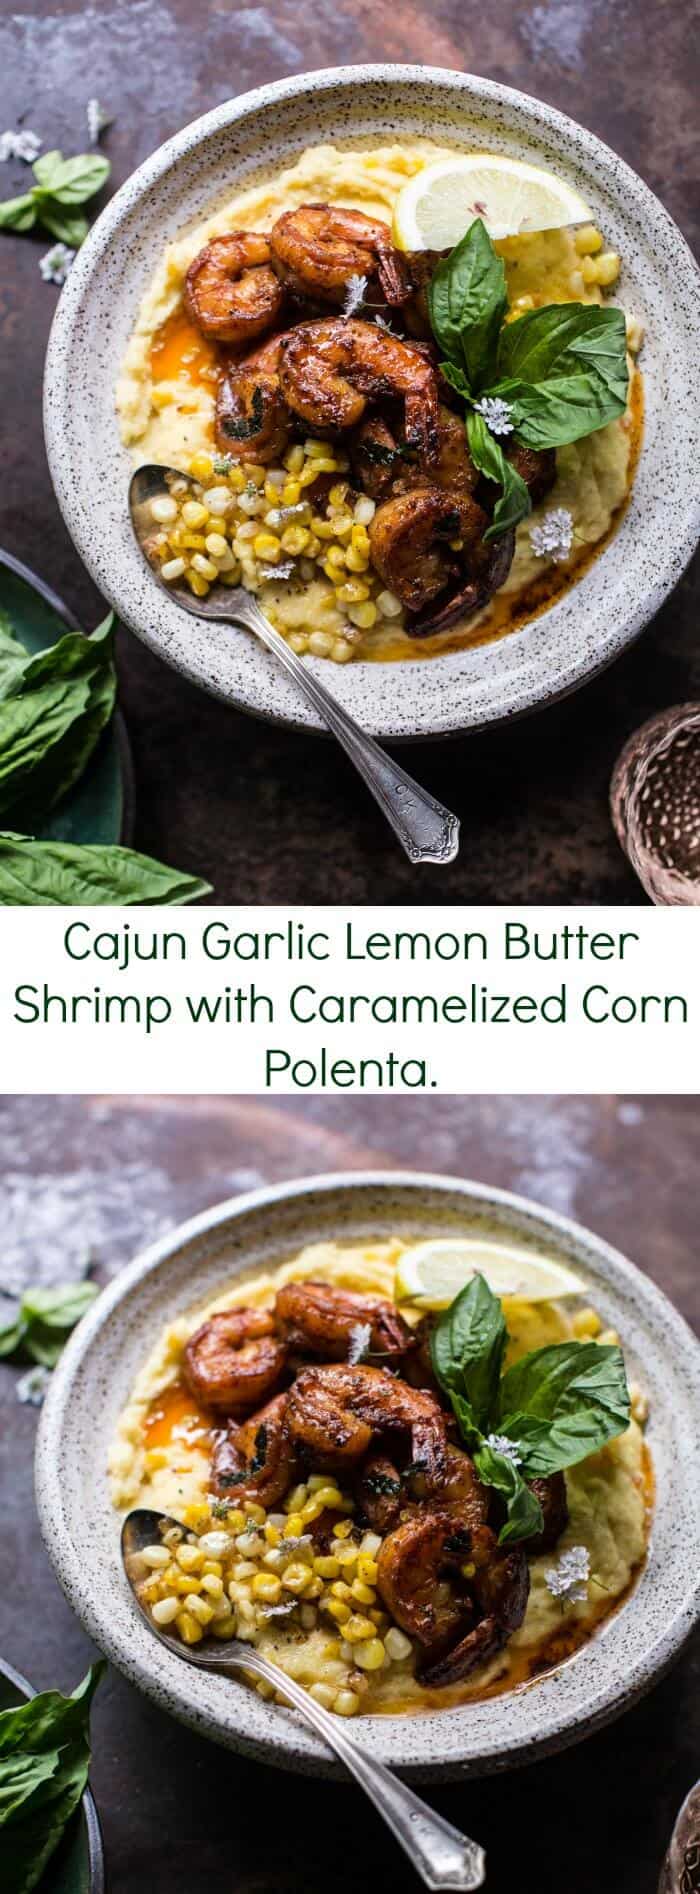 Cajun Garlic Lemon Butter Shrimp with Caramelized Corn Polenta | halfbakedharvest.com @hbharvest